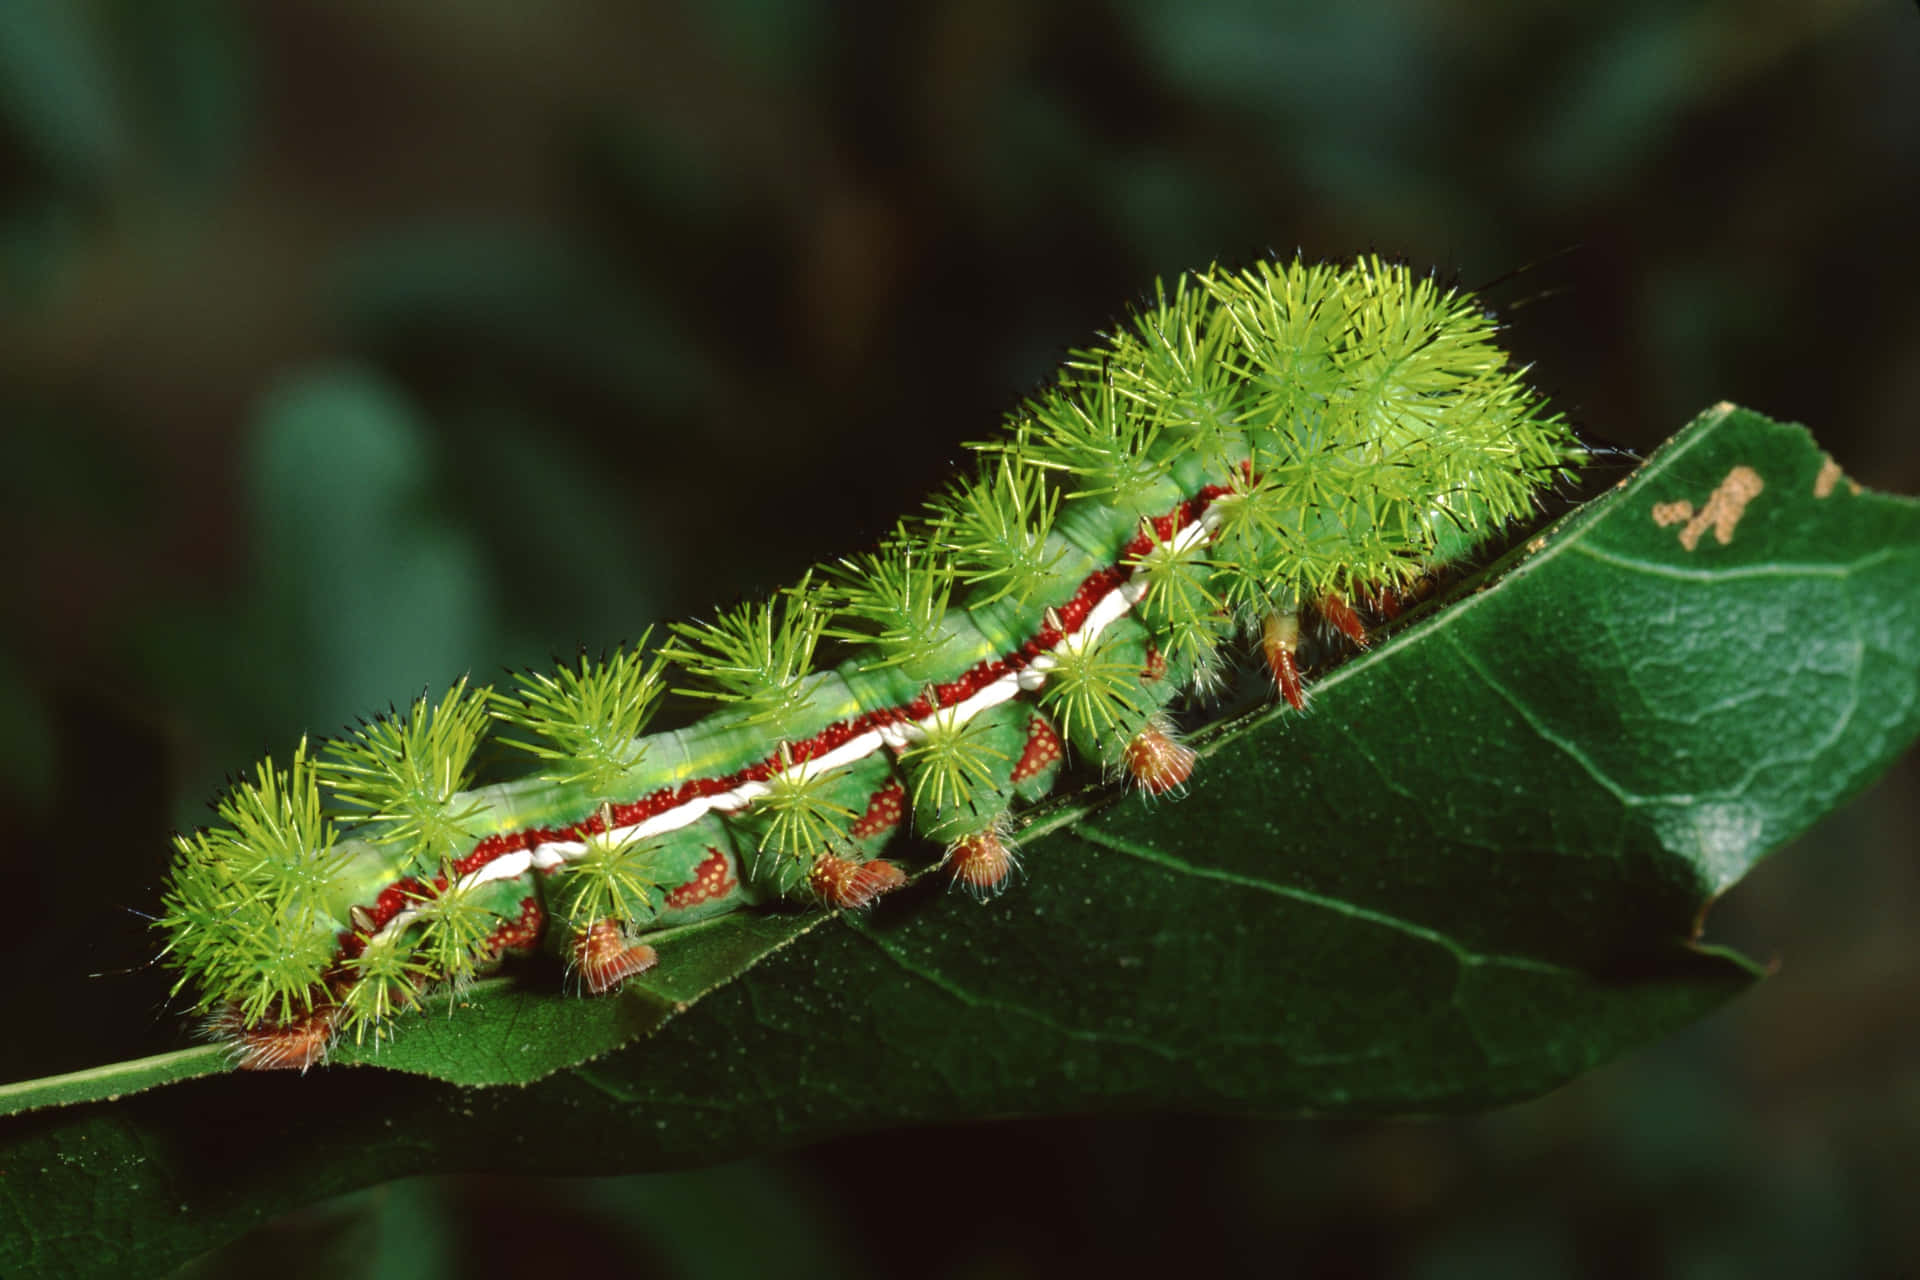 A Green Caterpillar On A Leaf